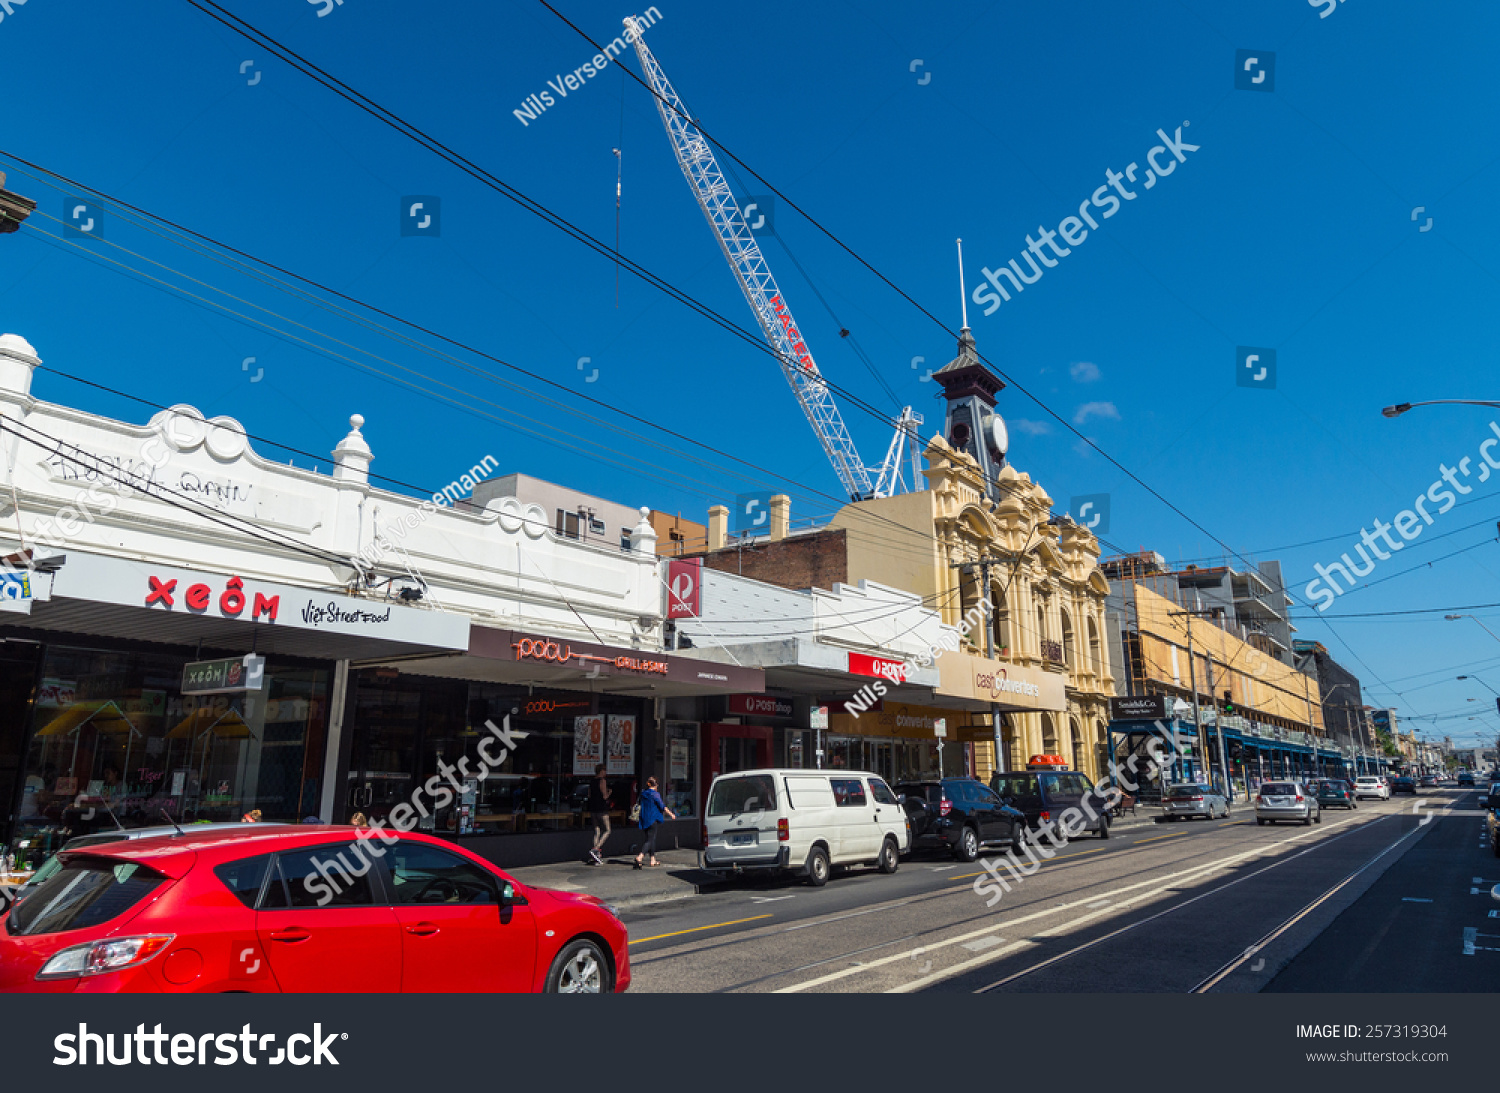 Melbourne, Australia - February 8, 2015: Smith Street In Collingwood, The Major Shopping Street ...